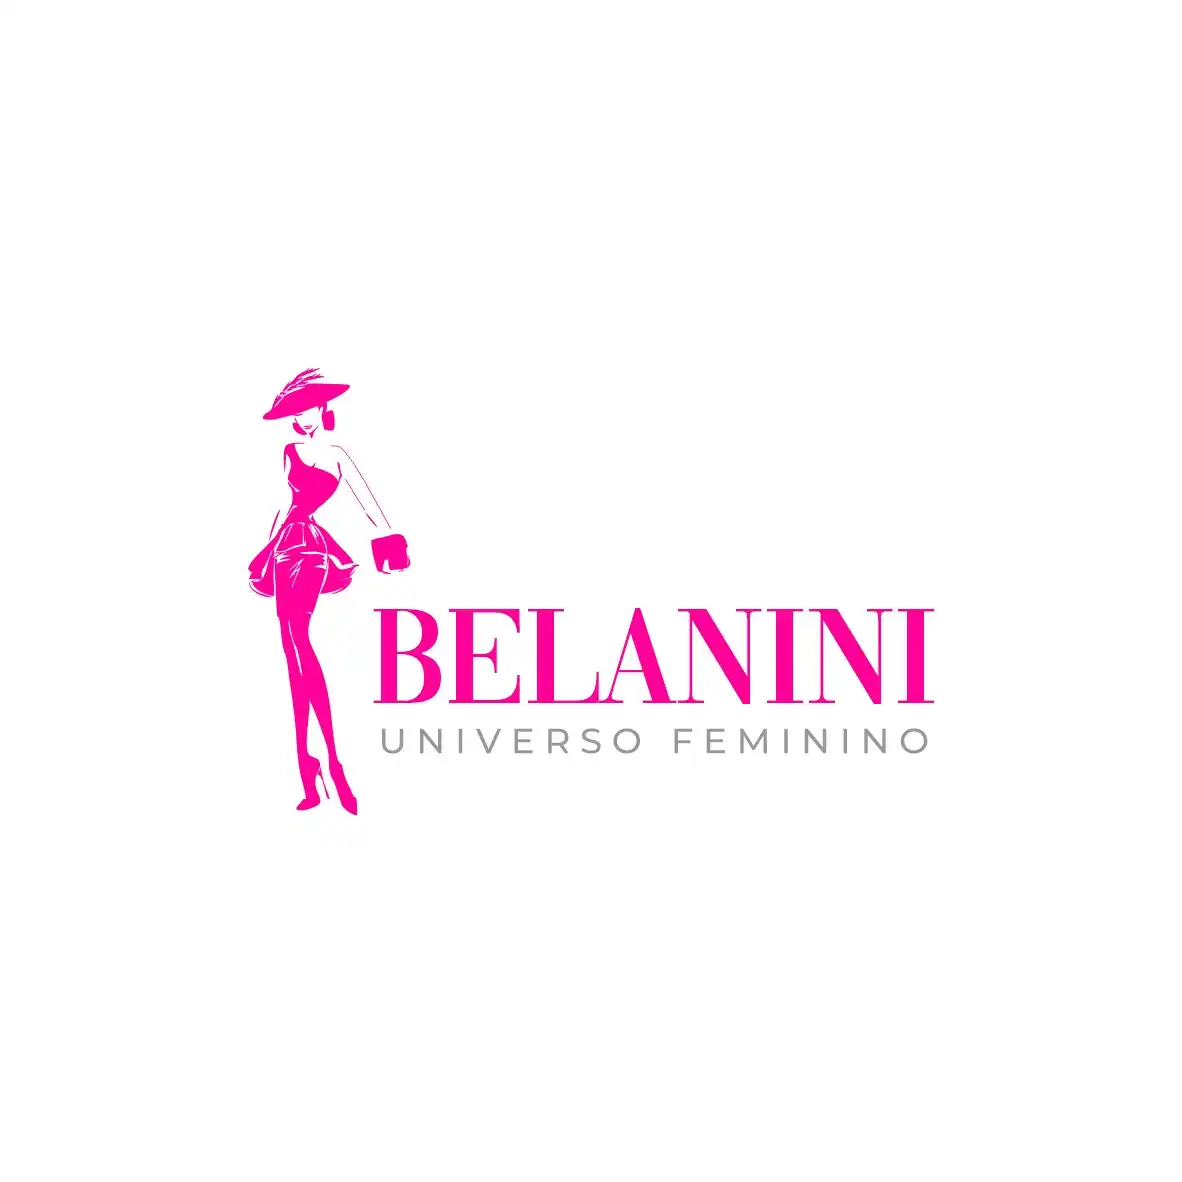 
Logotipo Logomarca Moda Feminina e Acessórios Femininos



